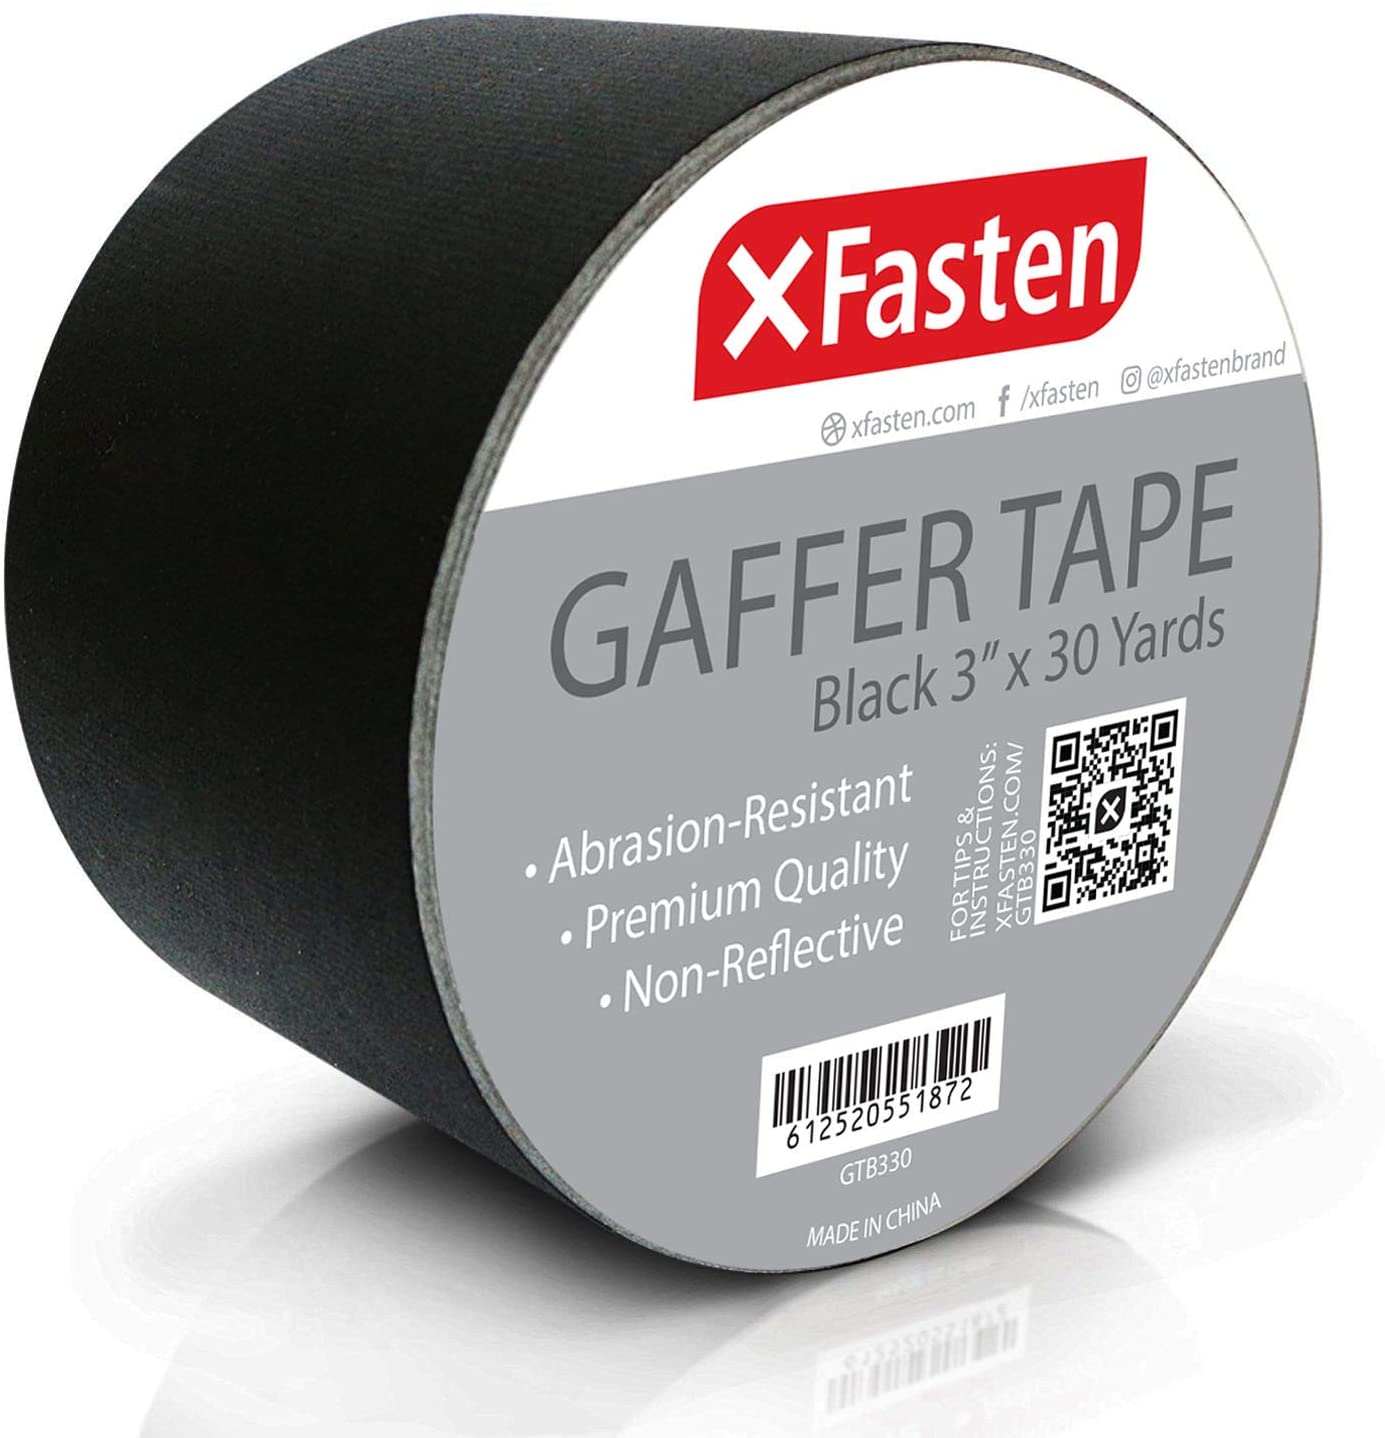 XFasten Professional Grade Gaffer Tape, 3